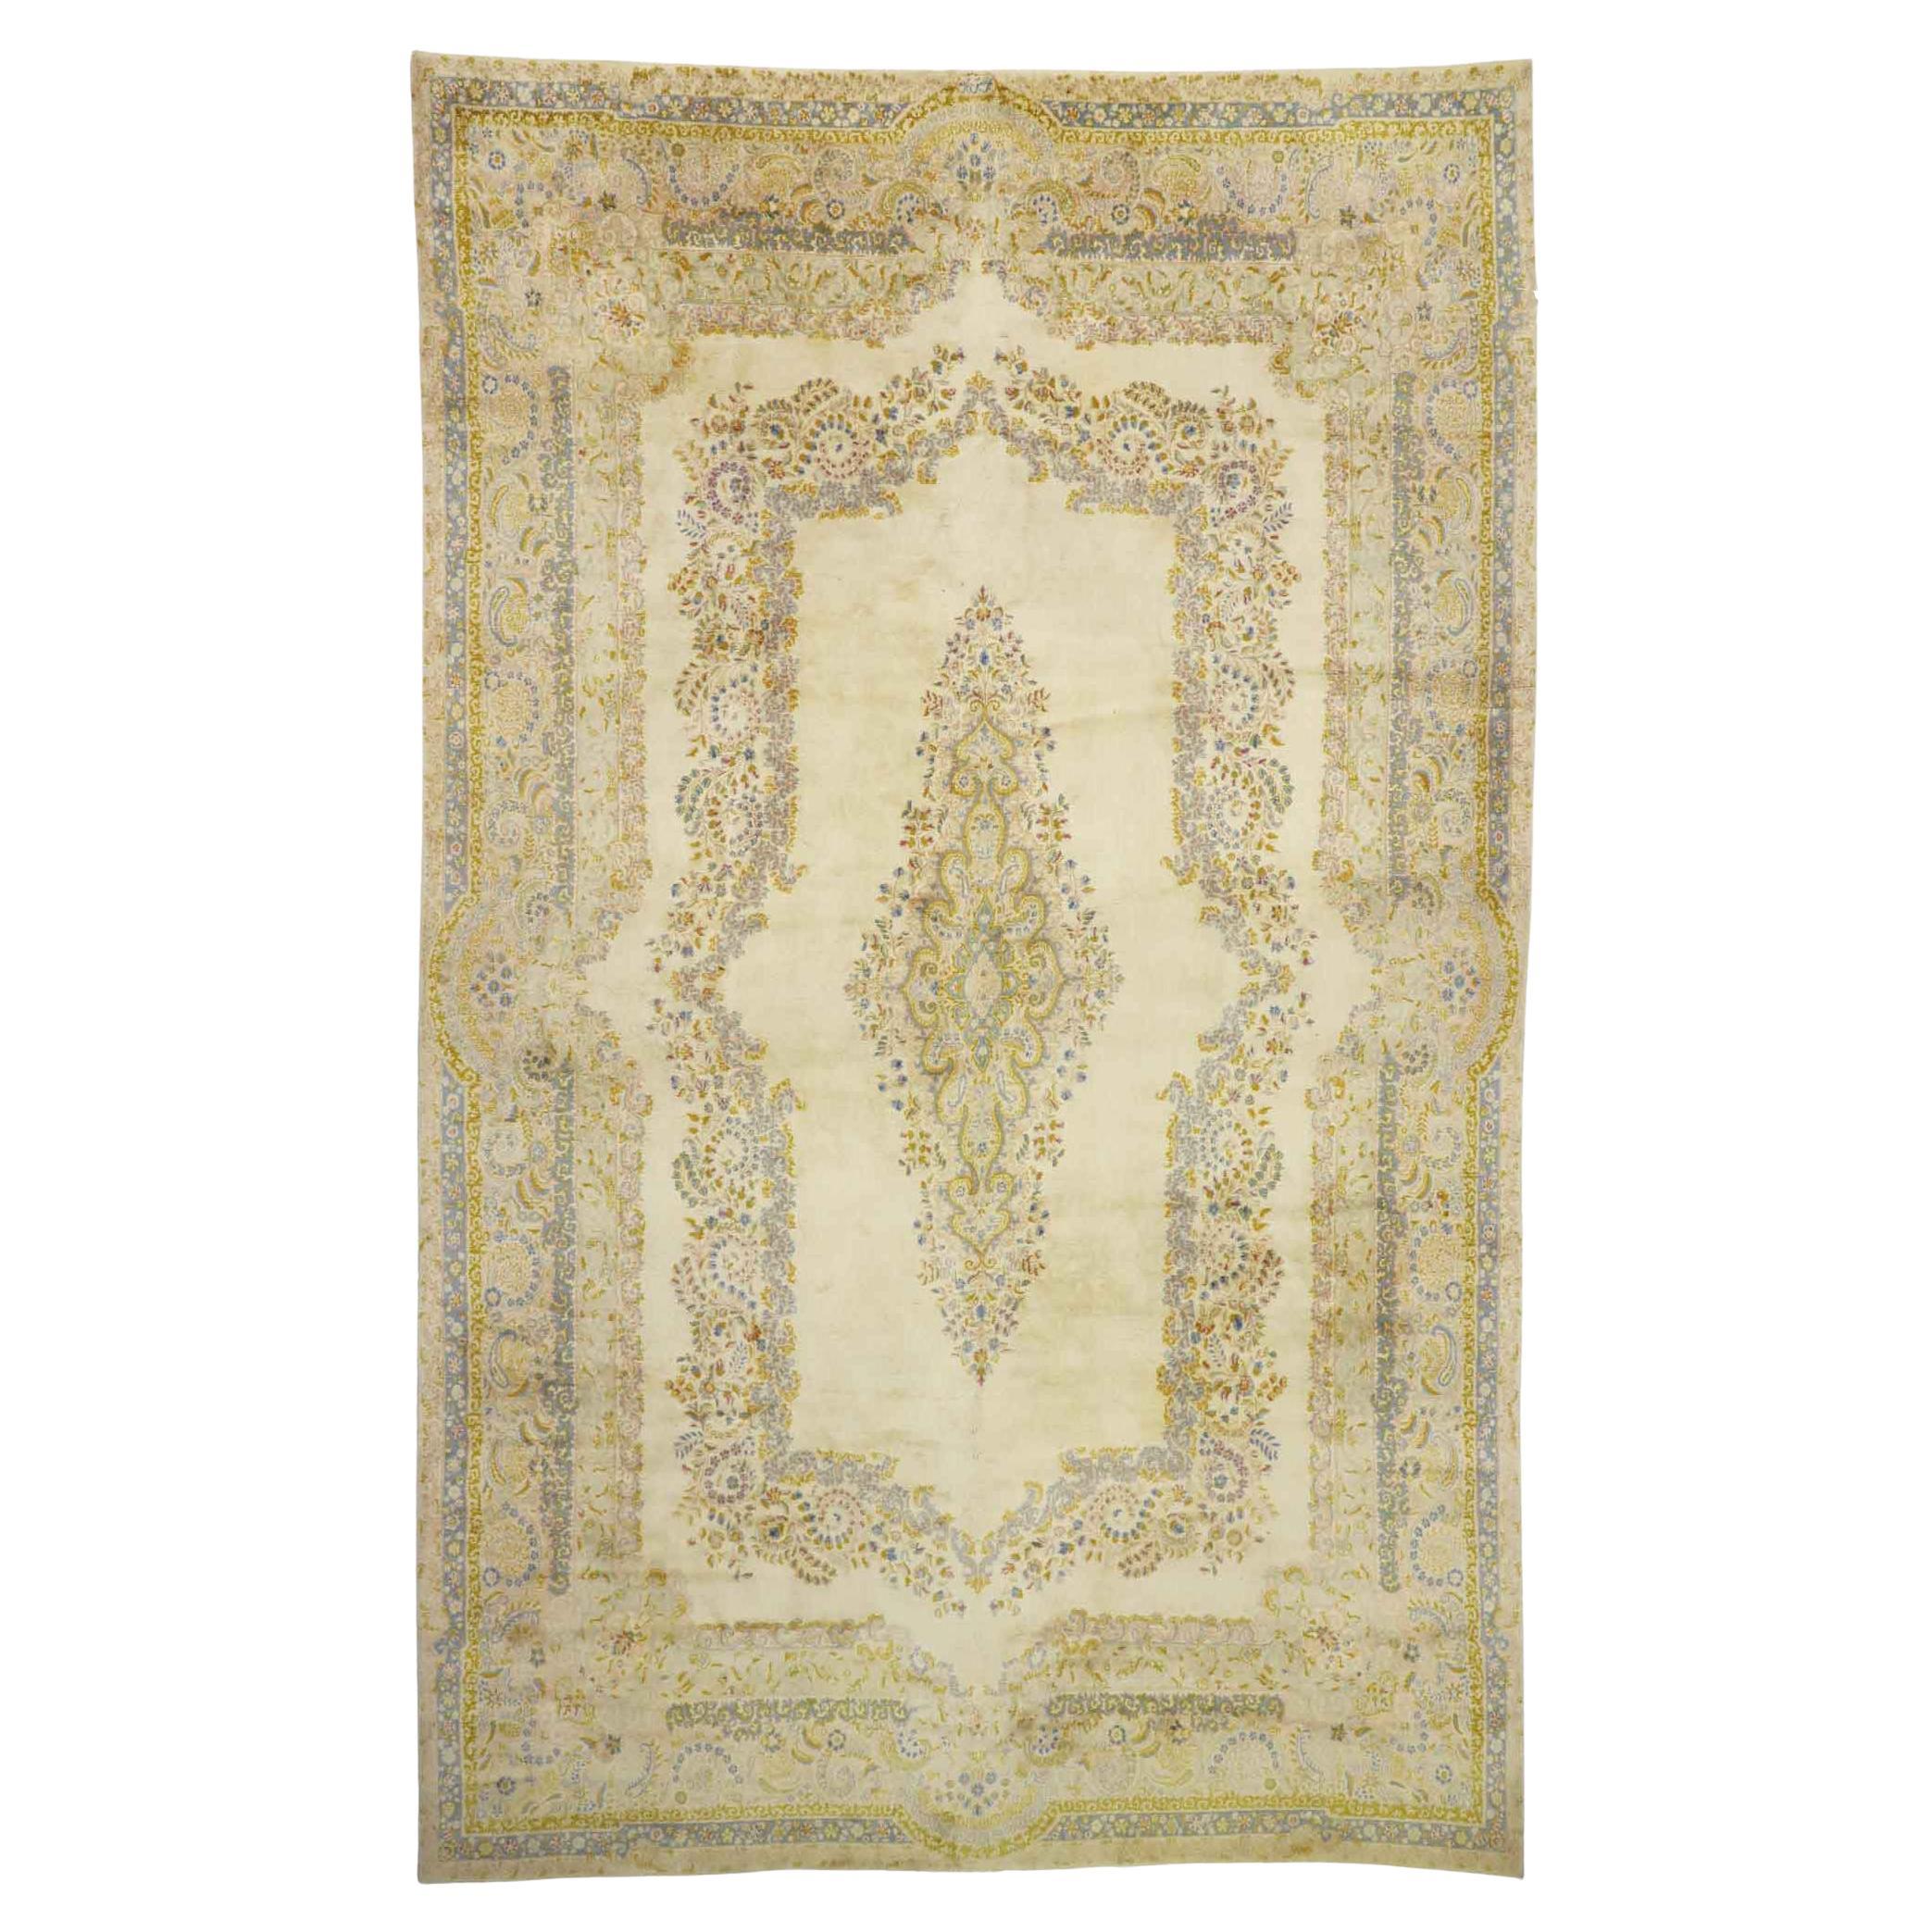 Antiker persischer Kerman-Teppich in Übergröße, Barock meets Bridgerton Regencycore